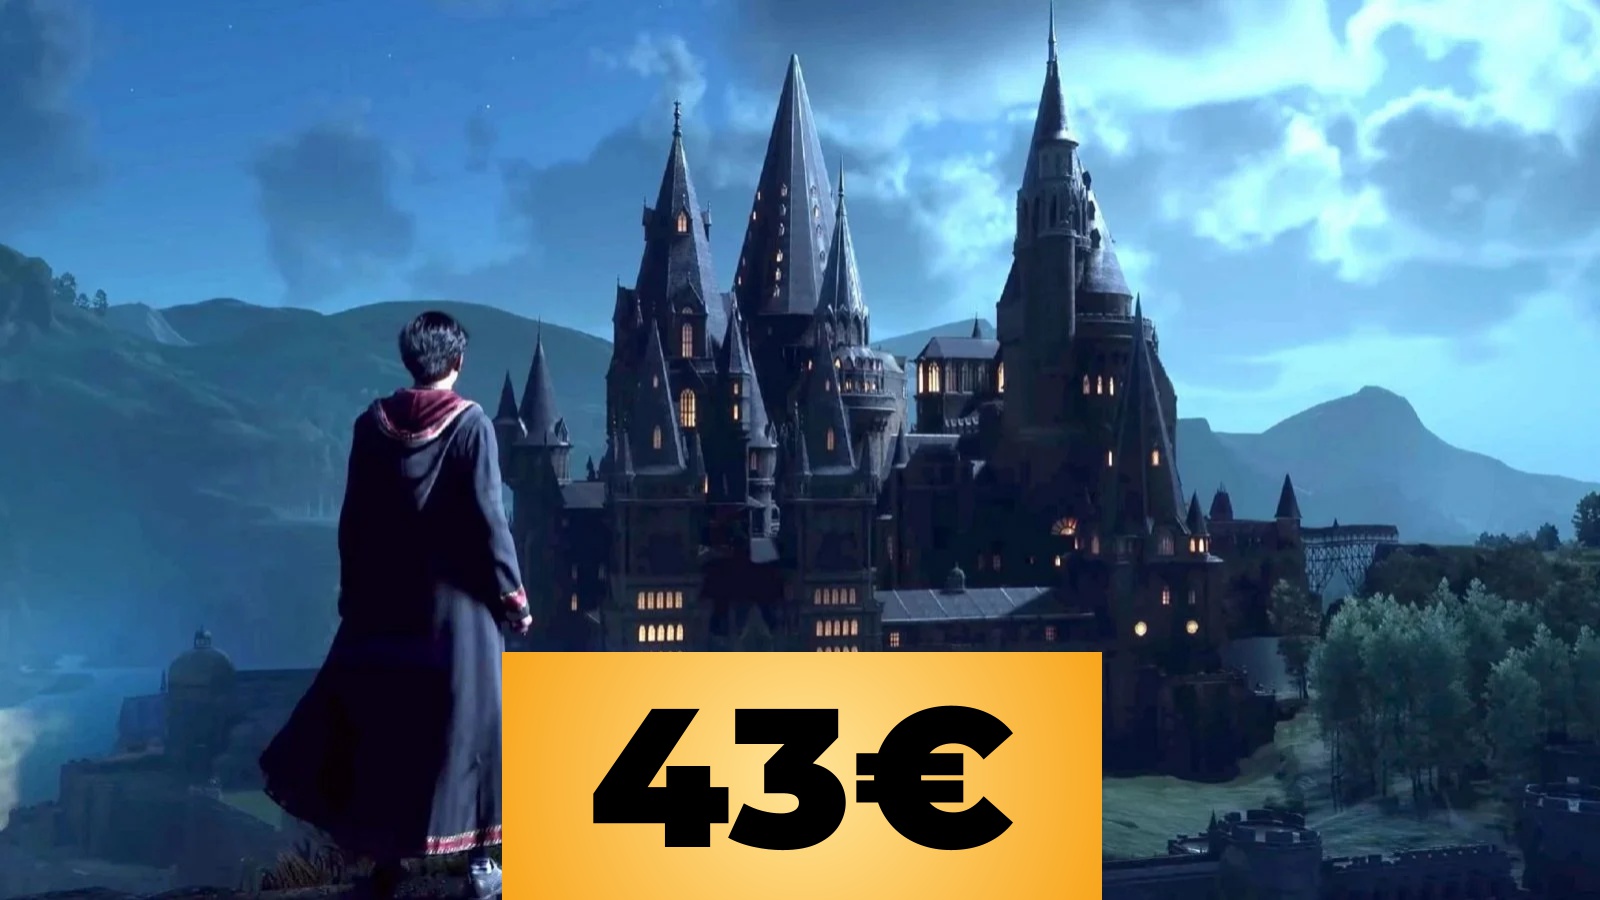 Offerte : Hogwarts Legacy per PS4 e Xbox One in sconto 